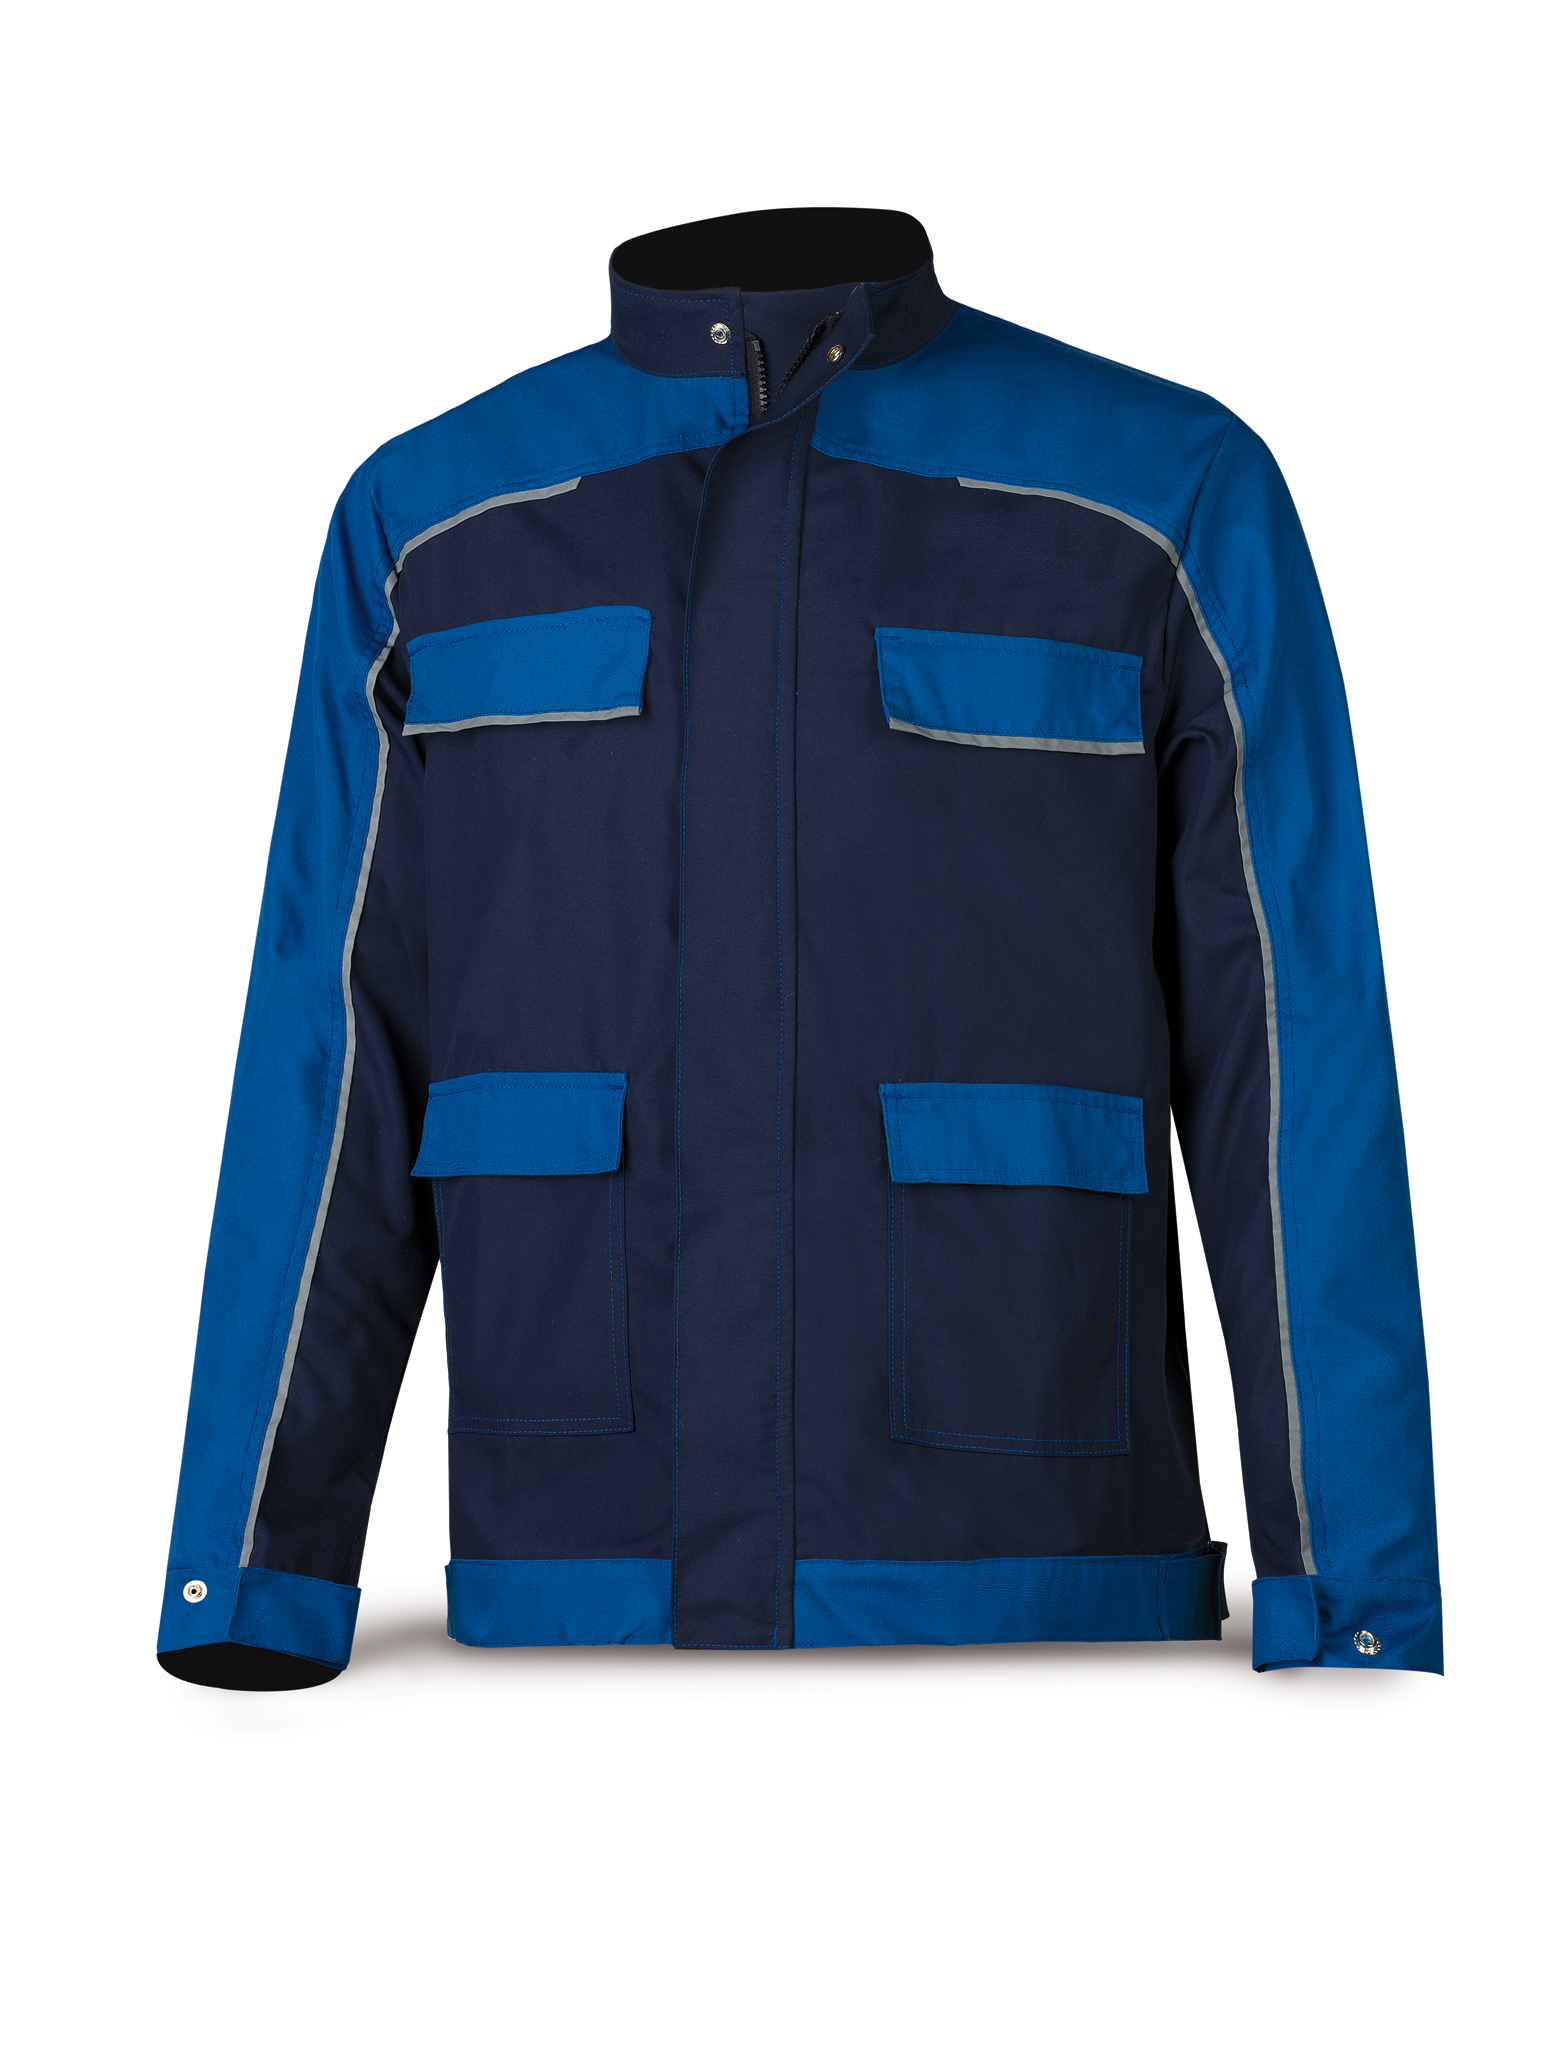 588-CAZA Workwear Pro Series Canvas jacket. Navy/Light blue.